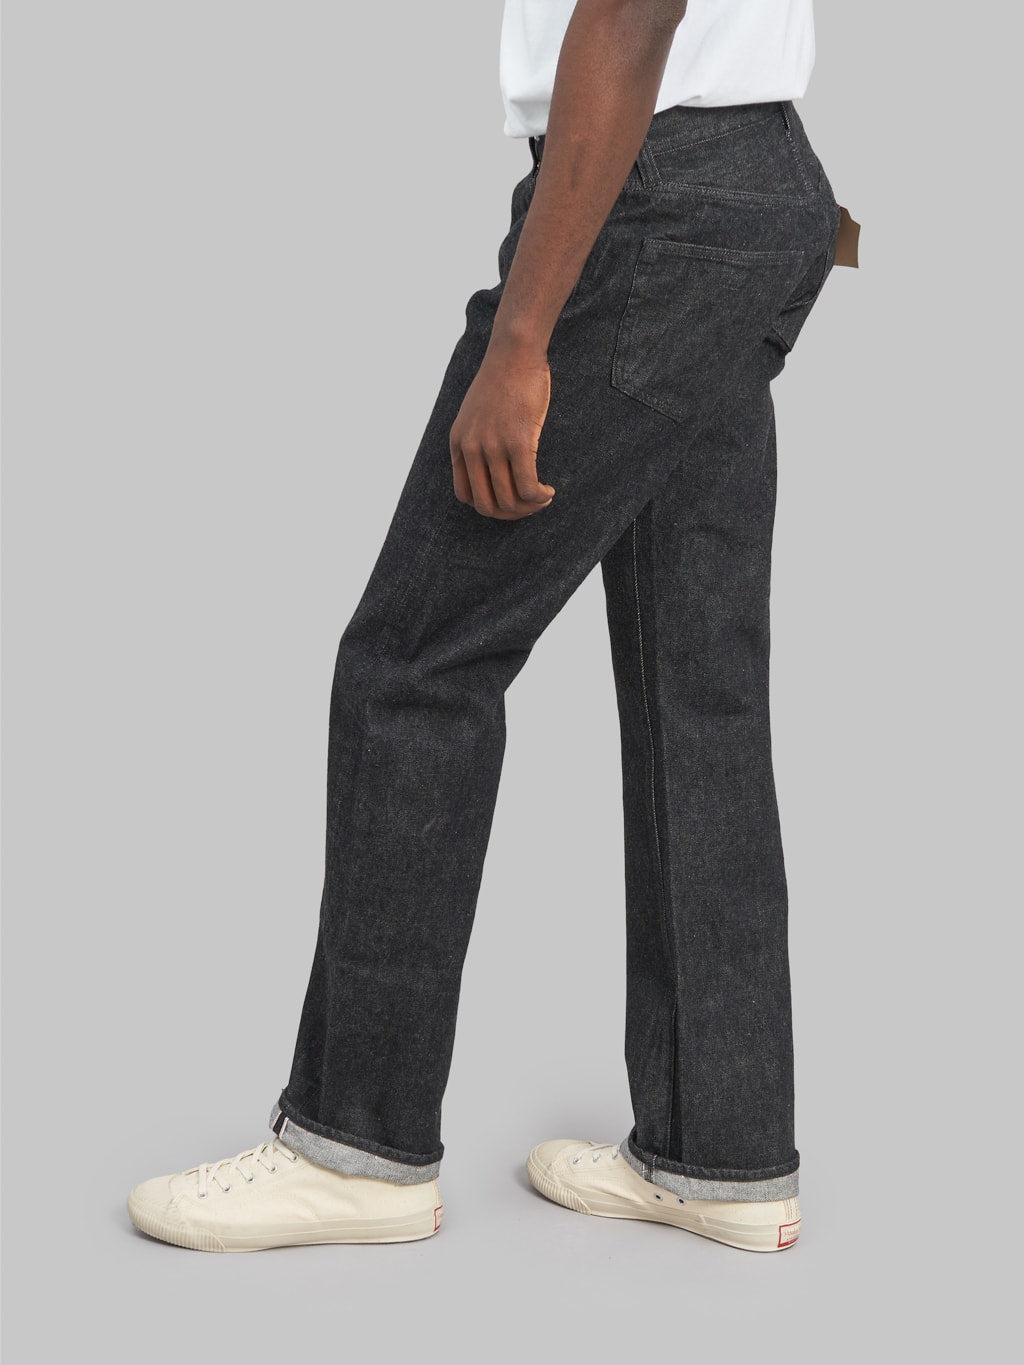 Sugar Cane "1947 Model" 14.25oz Black Denim Regular Straight Jeans